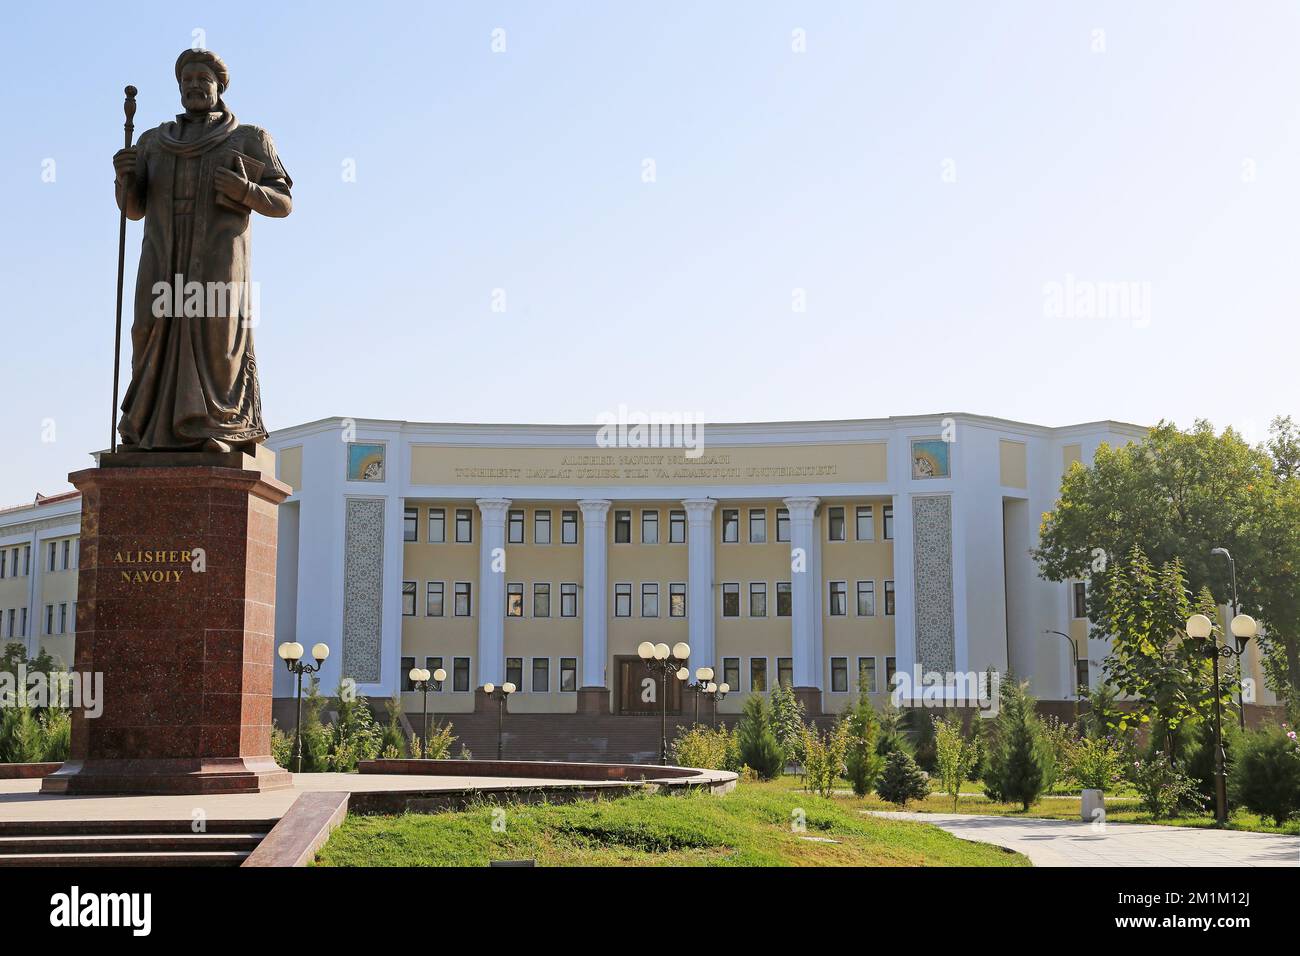 Alisher Navoi State University of Language and Literature, Yusuf Khos Hojib Street, South Tashkent, Tashkent Province, Uzbekistan, Central Asia Stock Photo